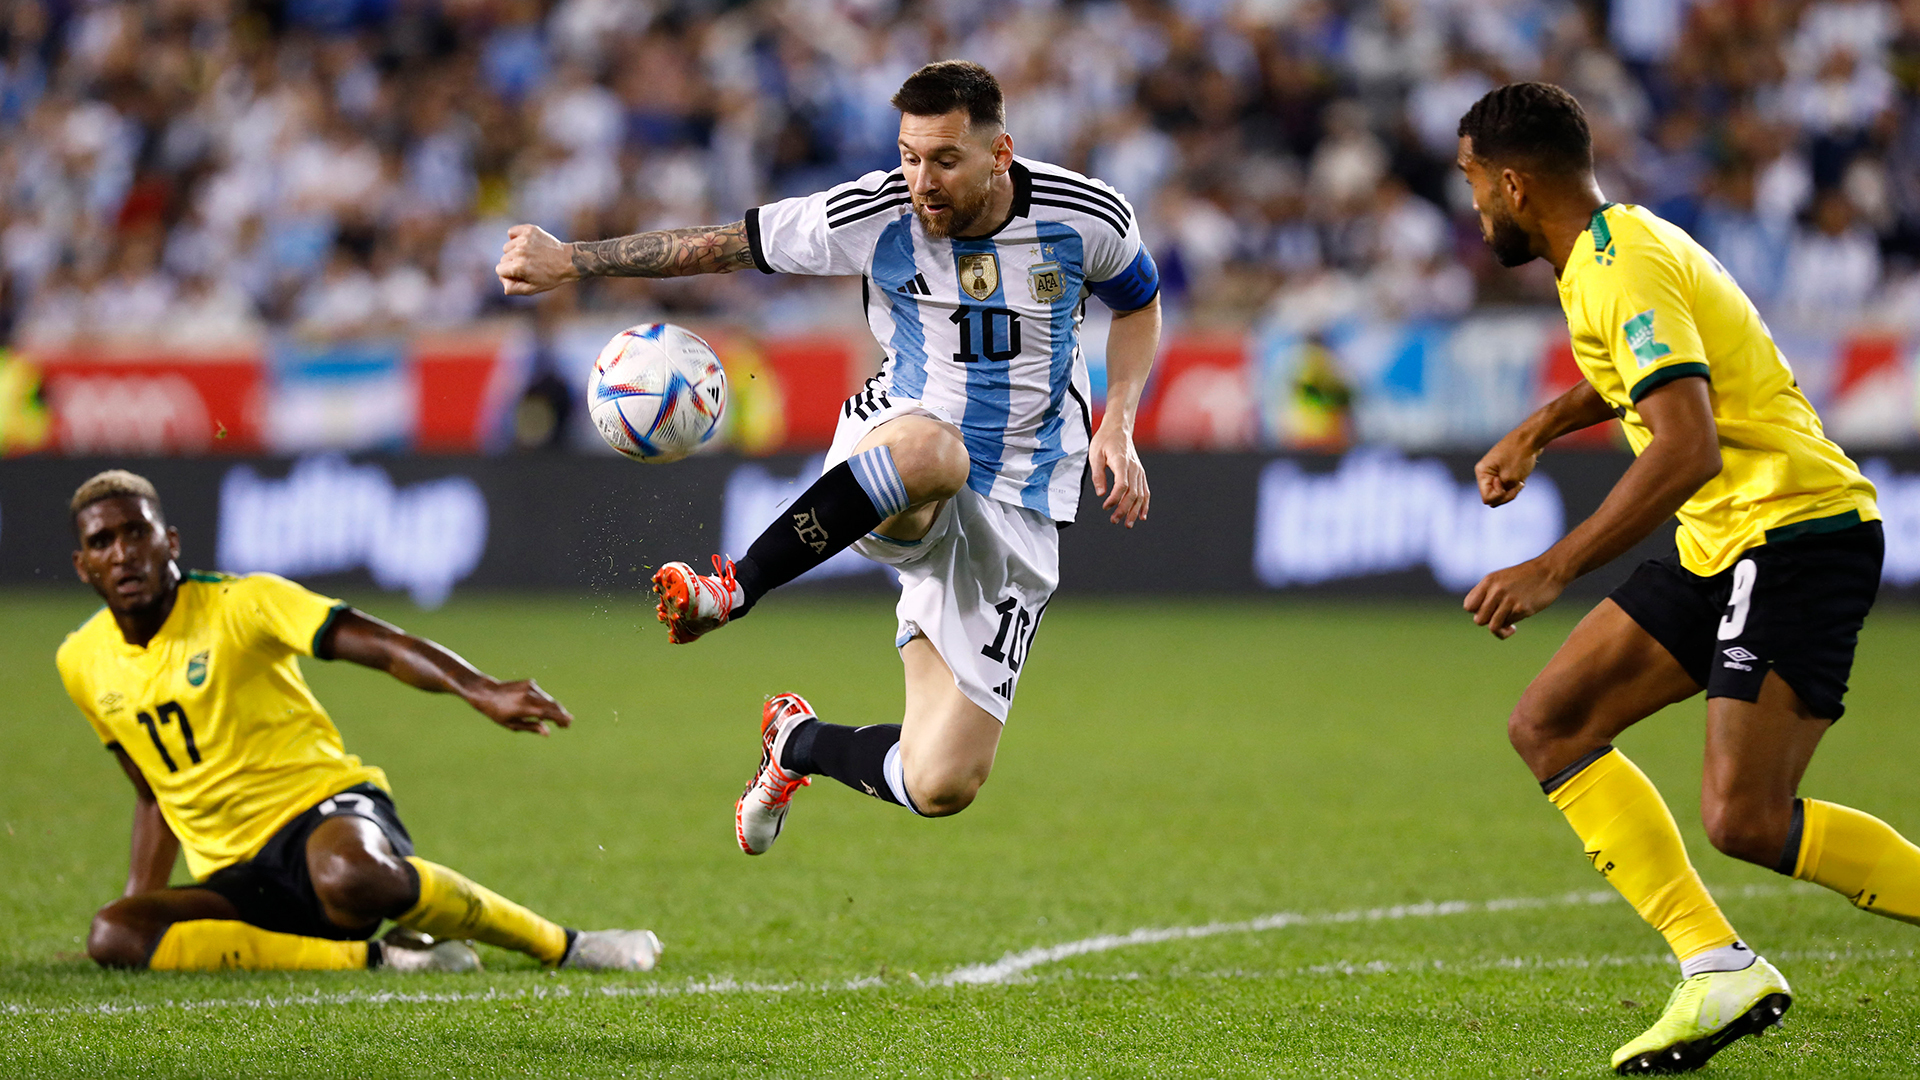 Argentina ganó y goleó a Jamaica con un show y doblete de Leo Messi